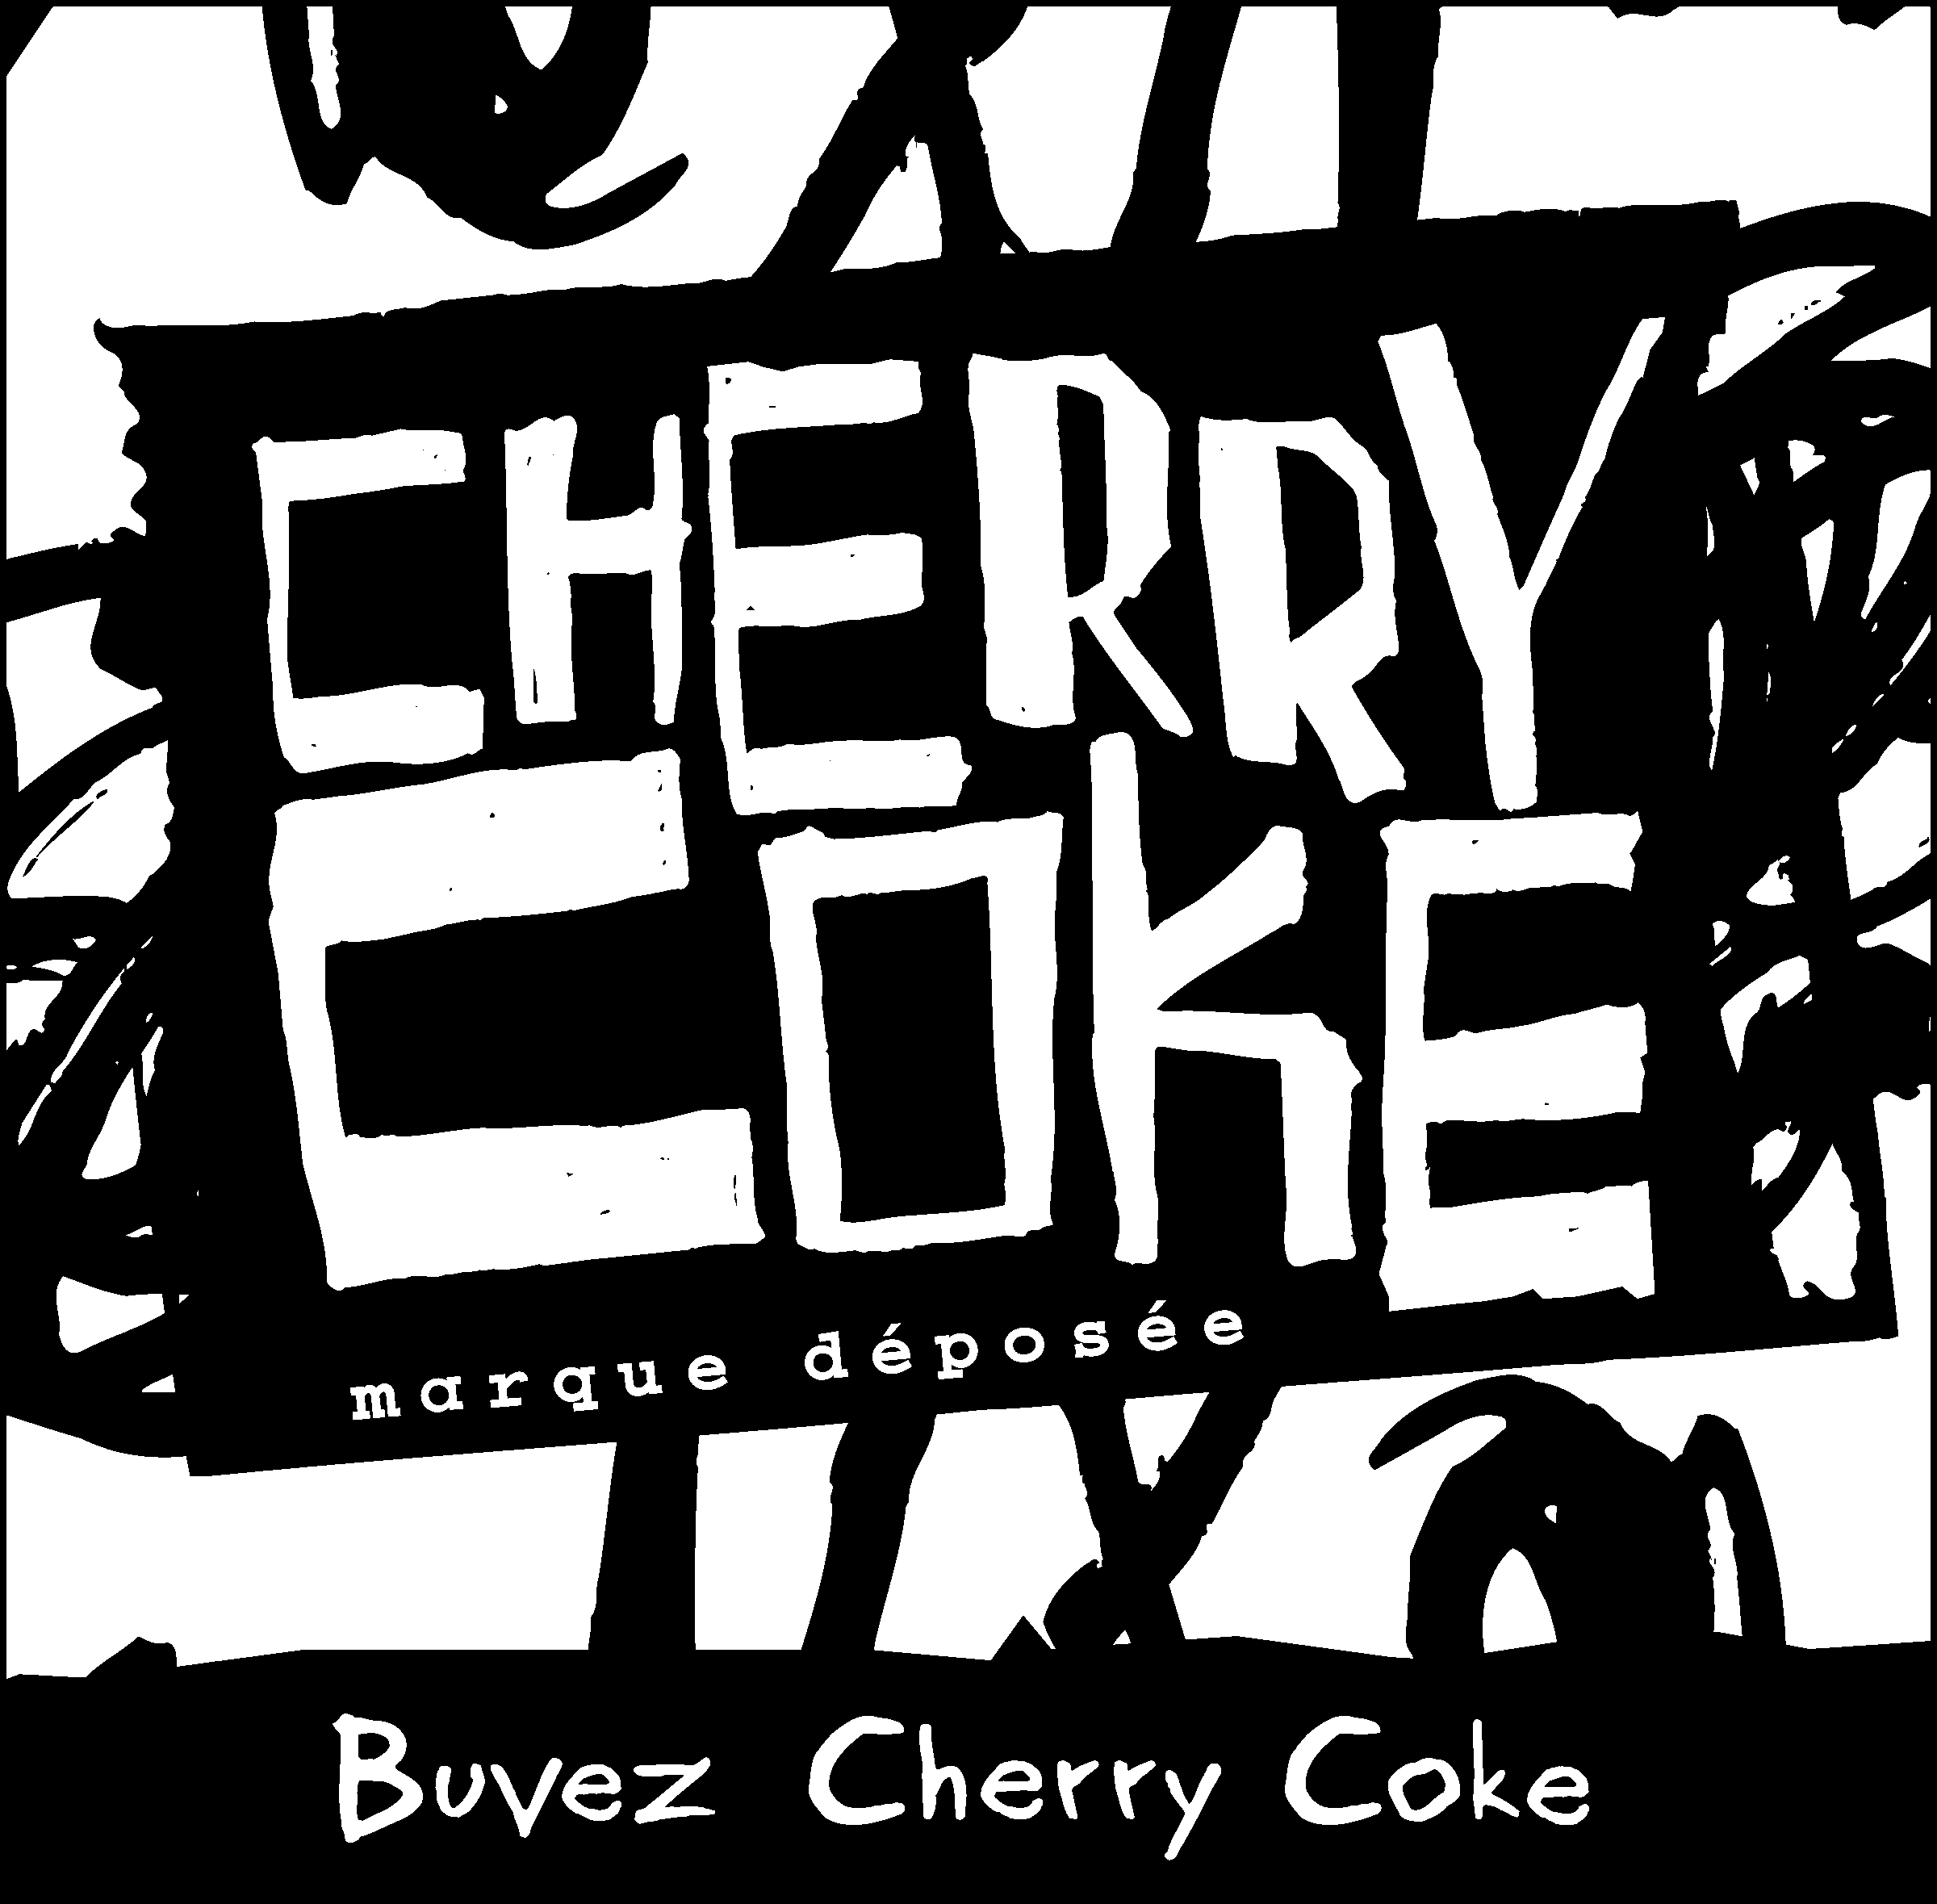 caffeine free cherry coke